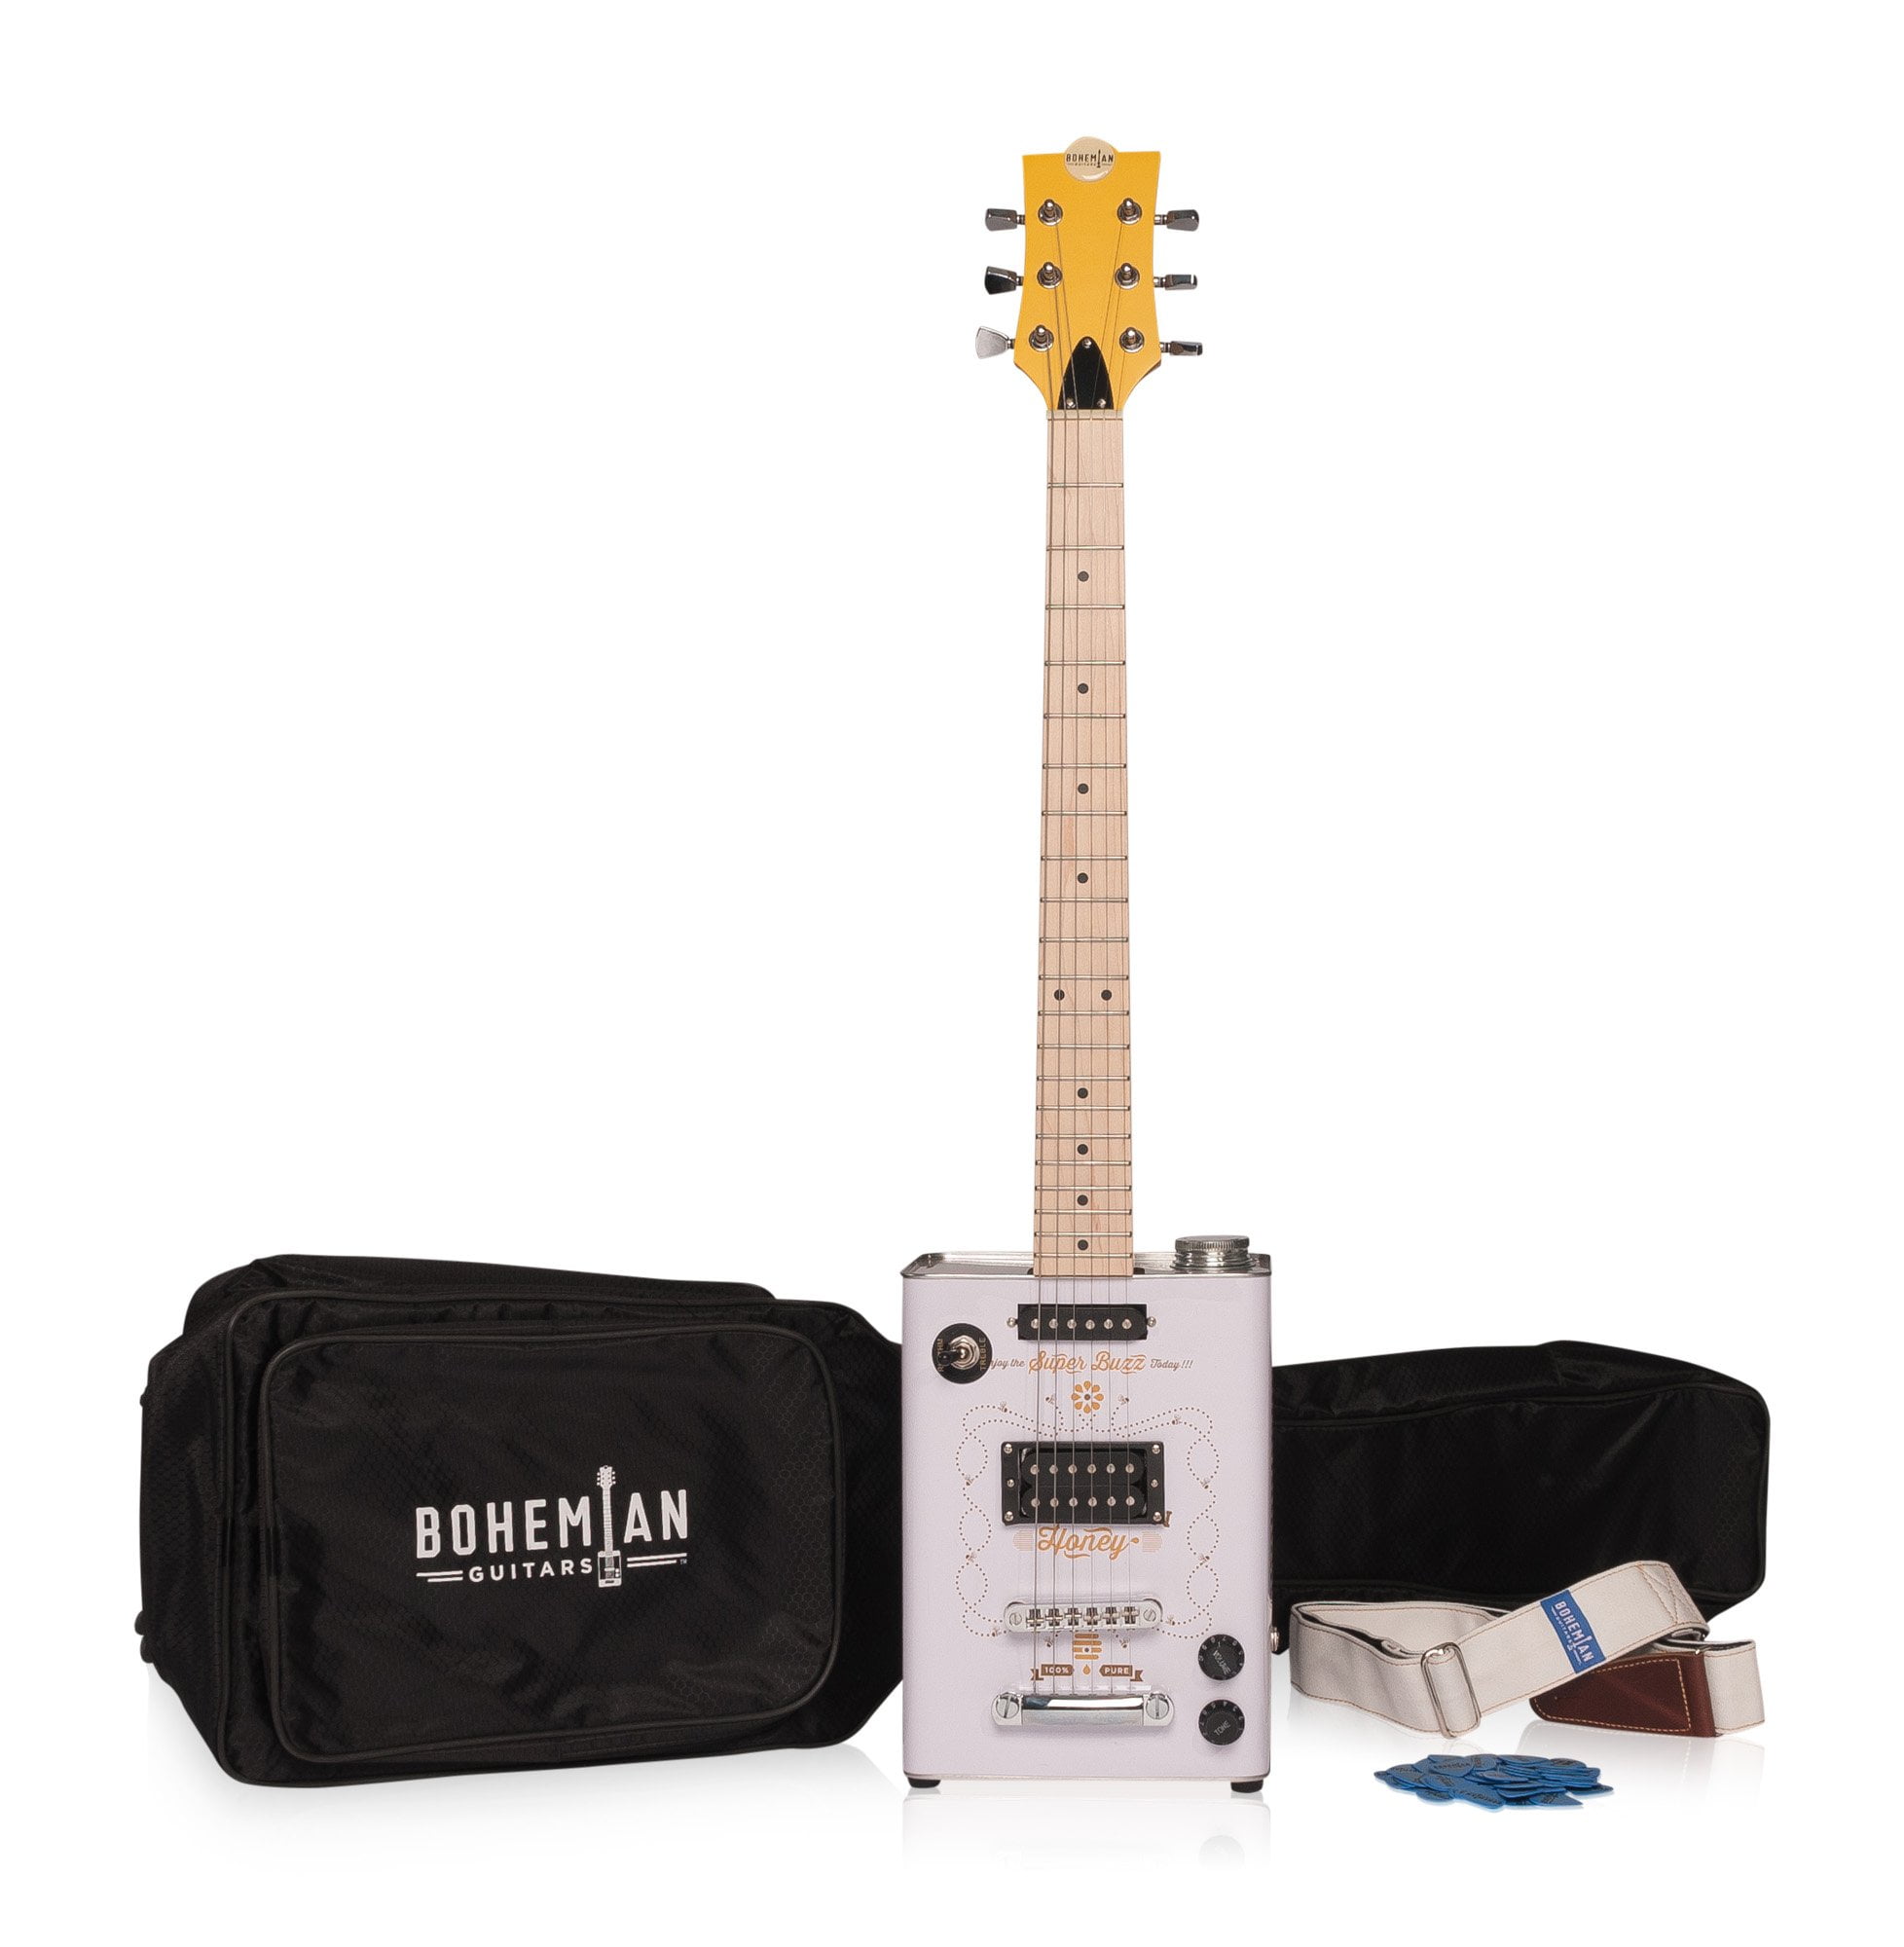 Bohemian Guitars MOTOR OIL Guitar Kit with Guitar, Gig Bag, Strap and Picks - Walmart.com